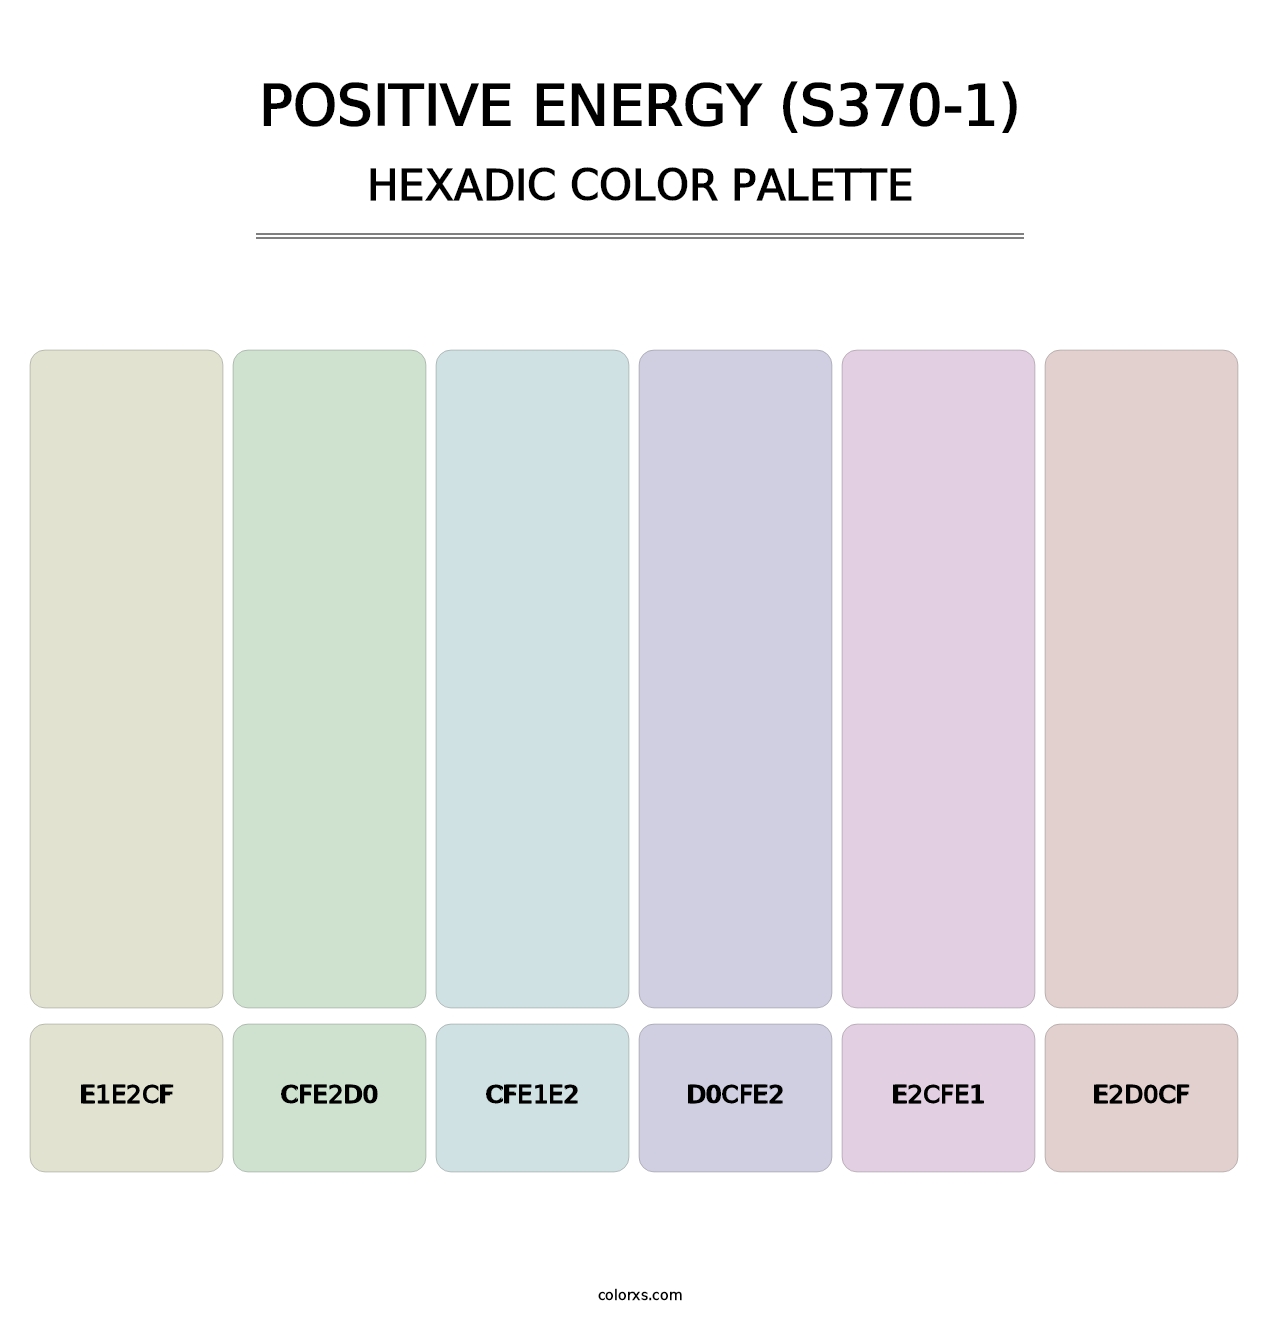 Positive Energy (S370-1) - Hexadic Color Palette